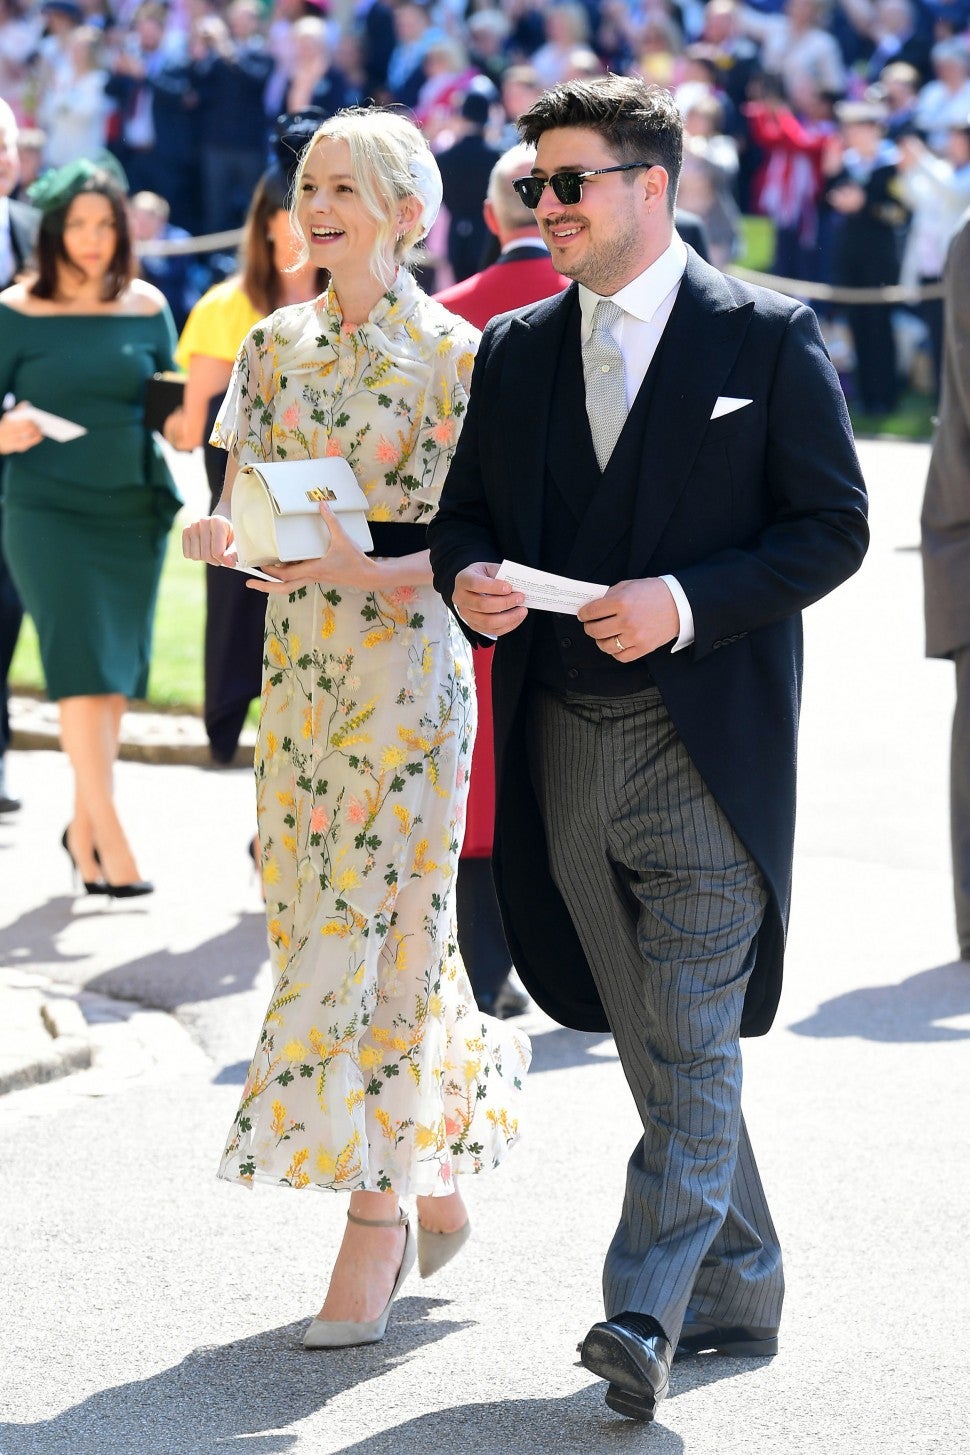 Carey Mulligan and Marcus Mumford at royal wedding